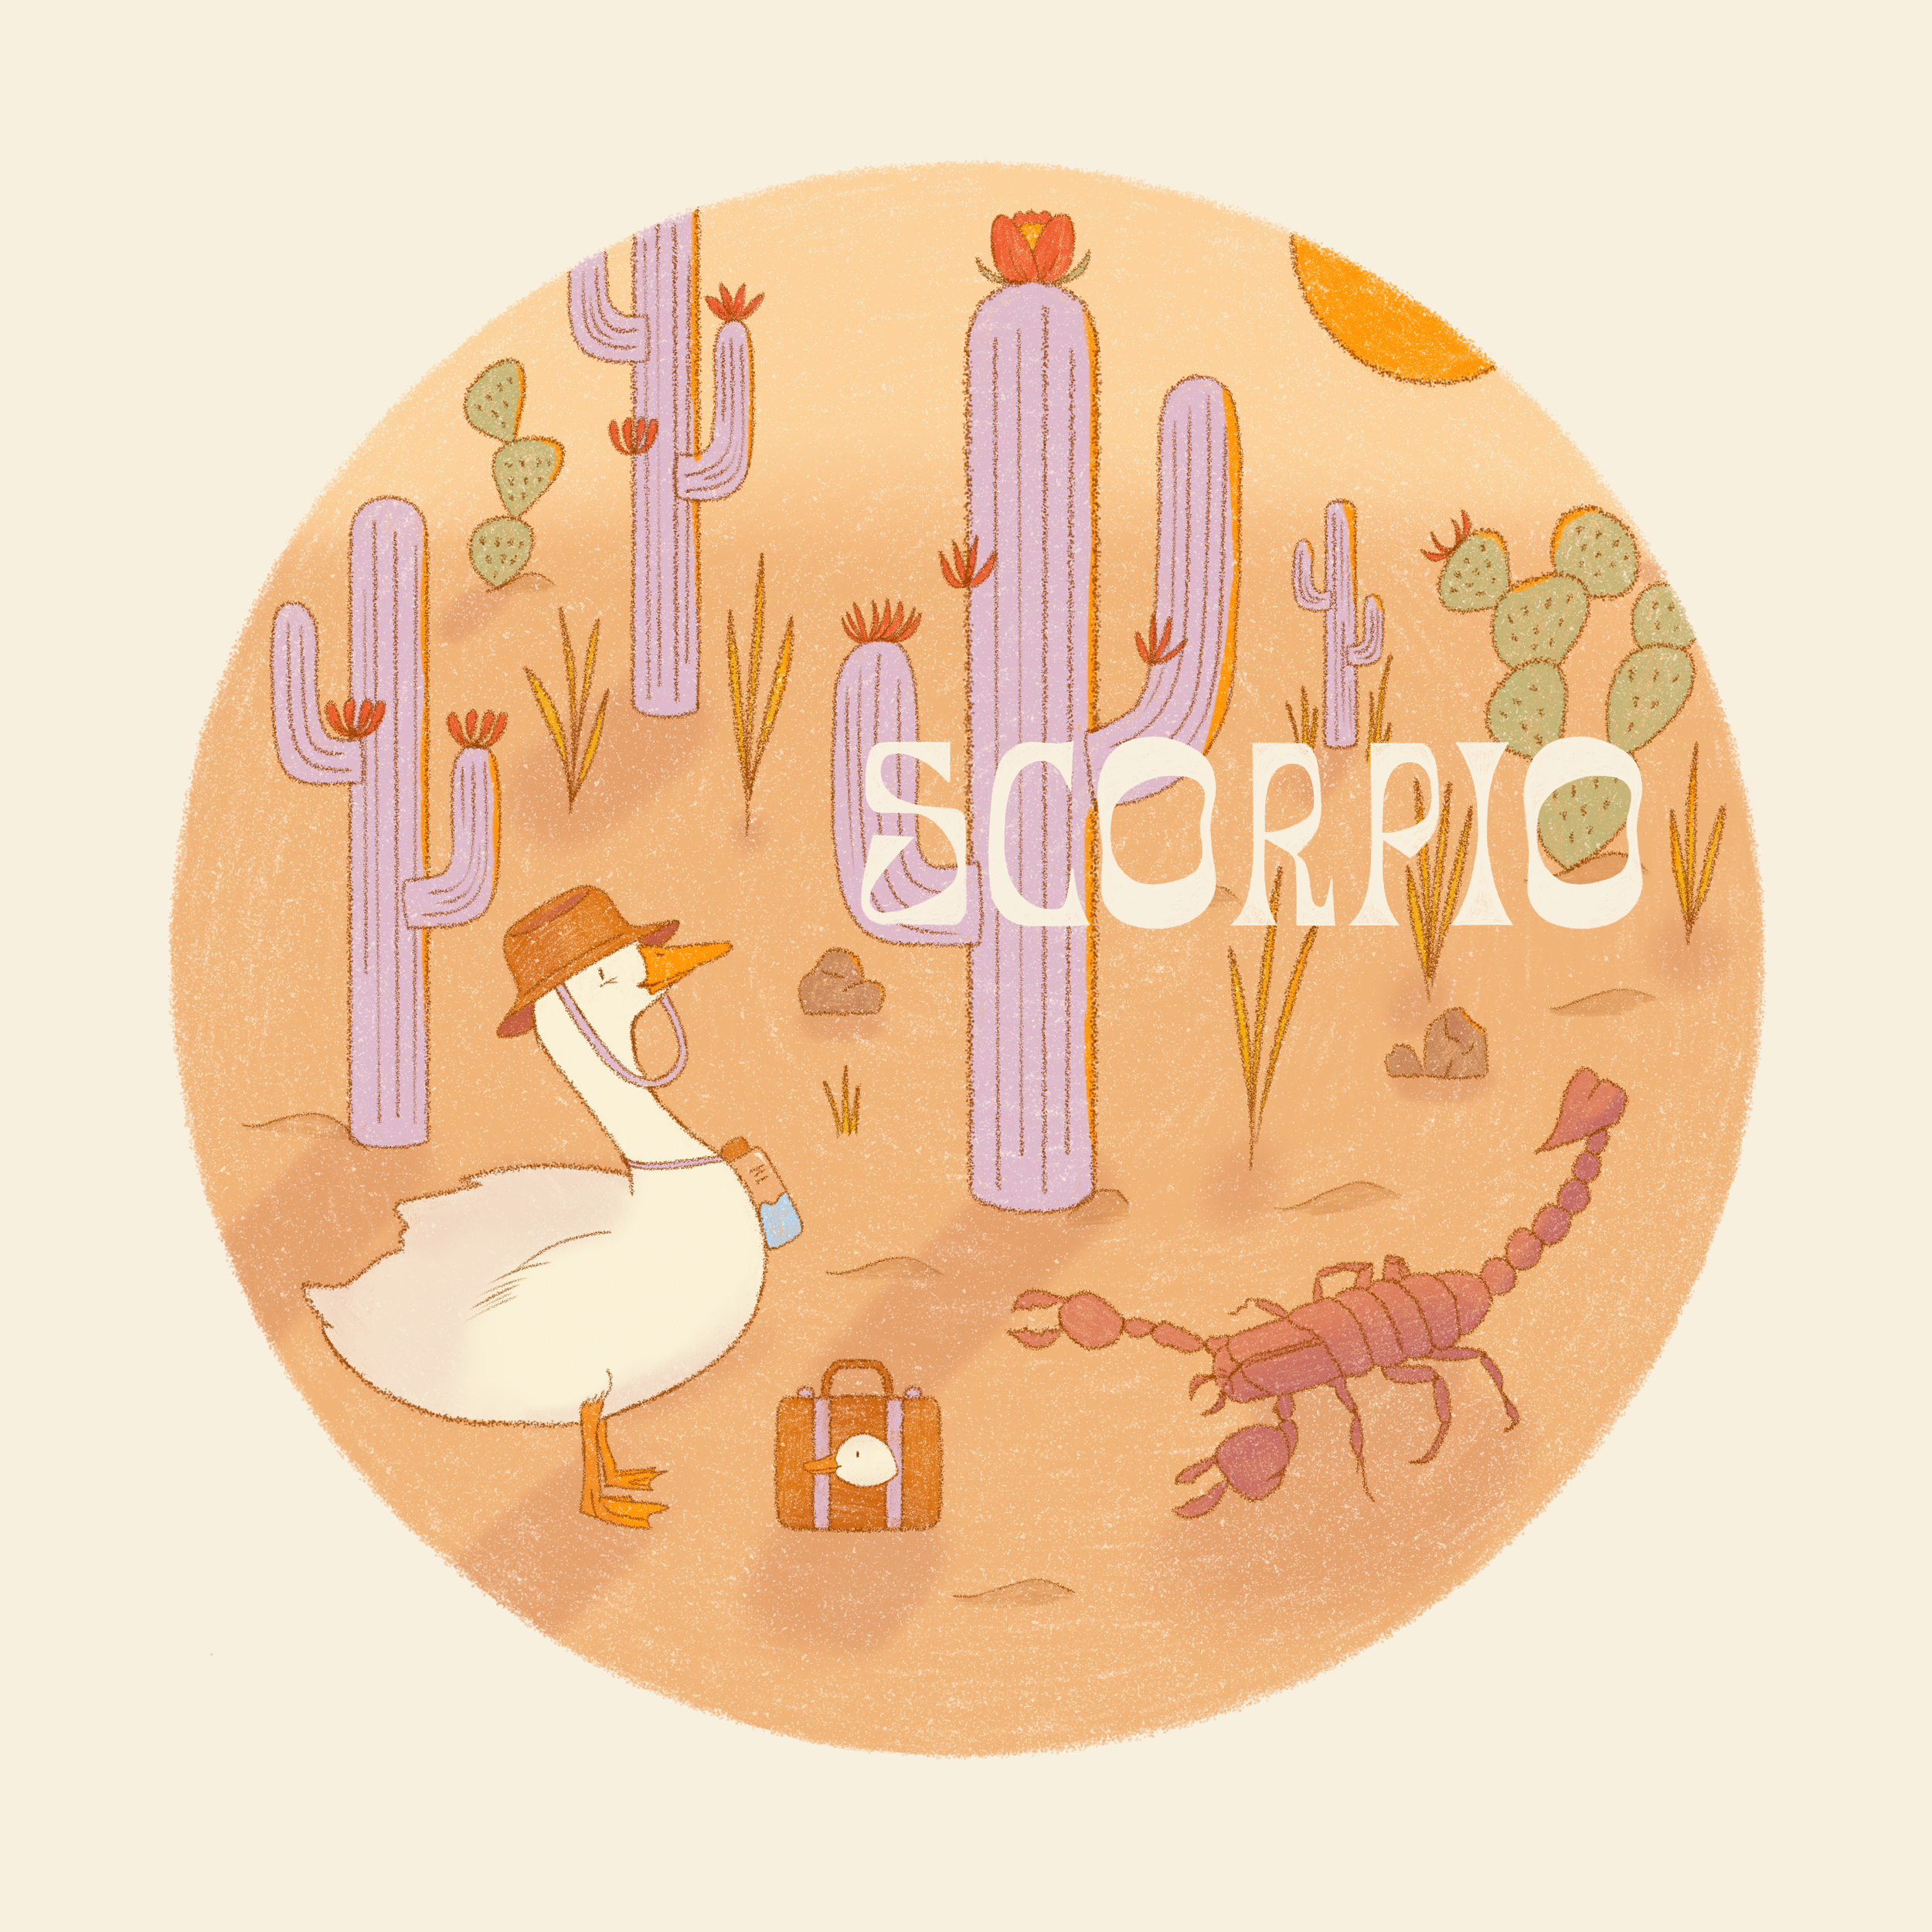 Scorpio - Final.png